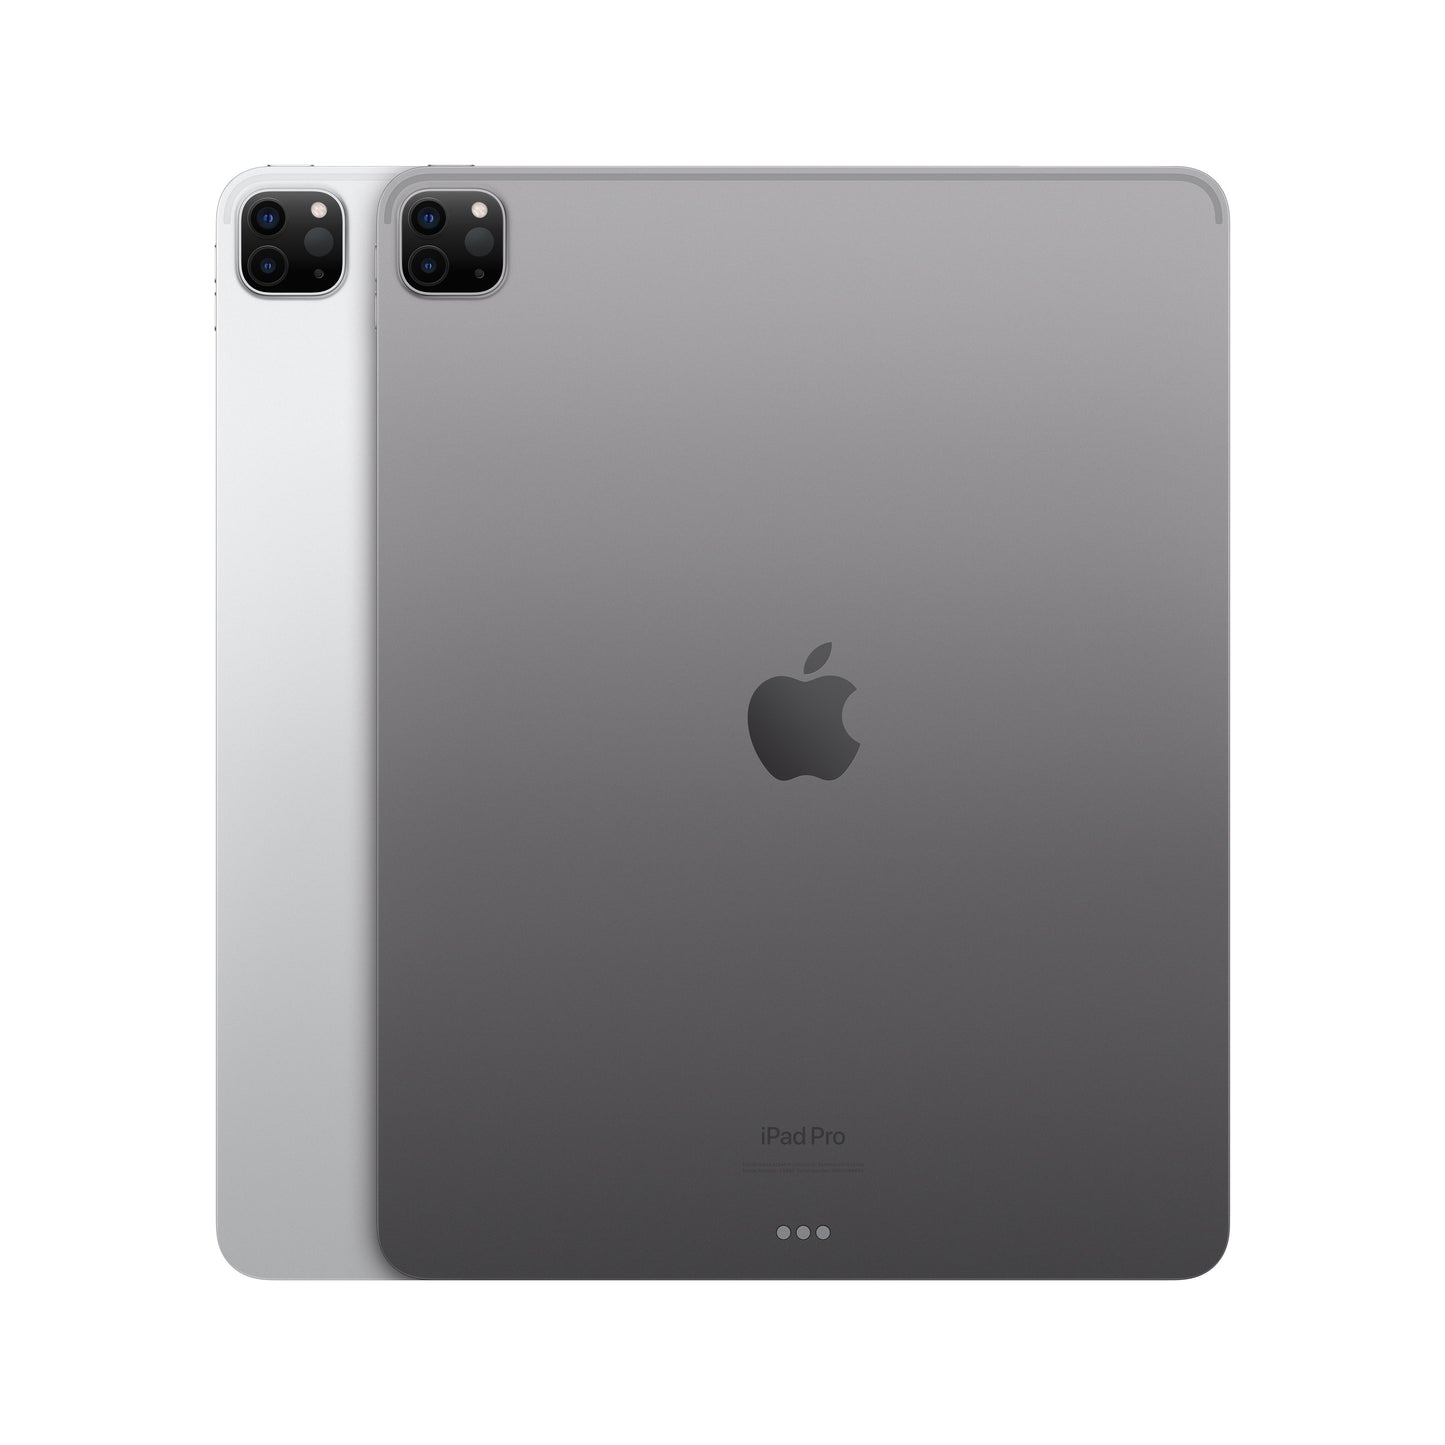 2022 iPad Pro مقاس 12.9 إنش Wi-Fi 128GB - فضي (الجيل السادس)